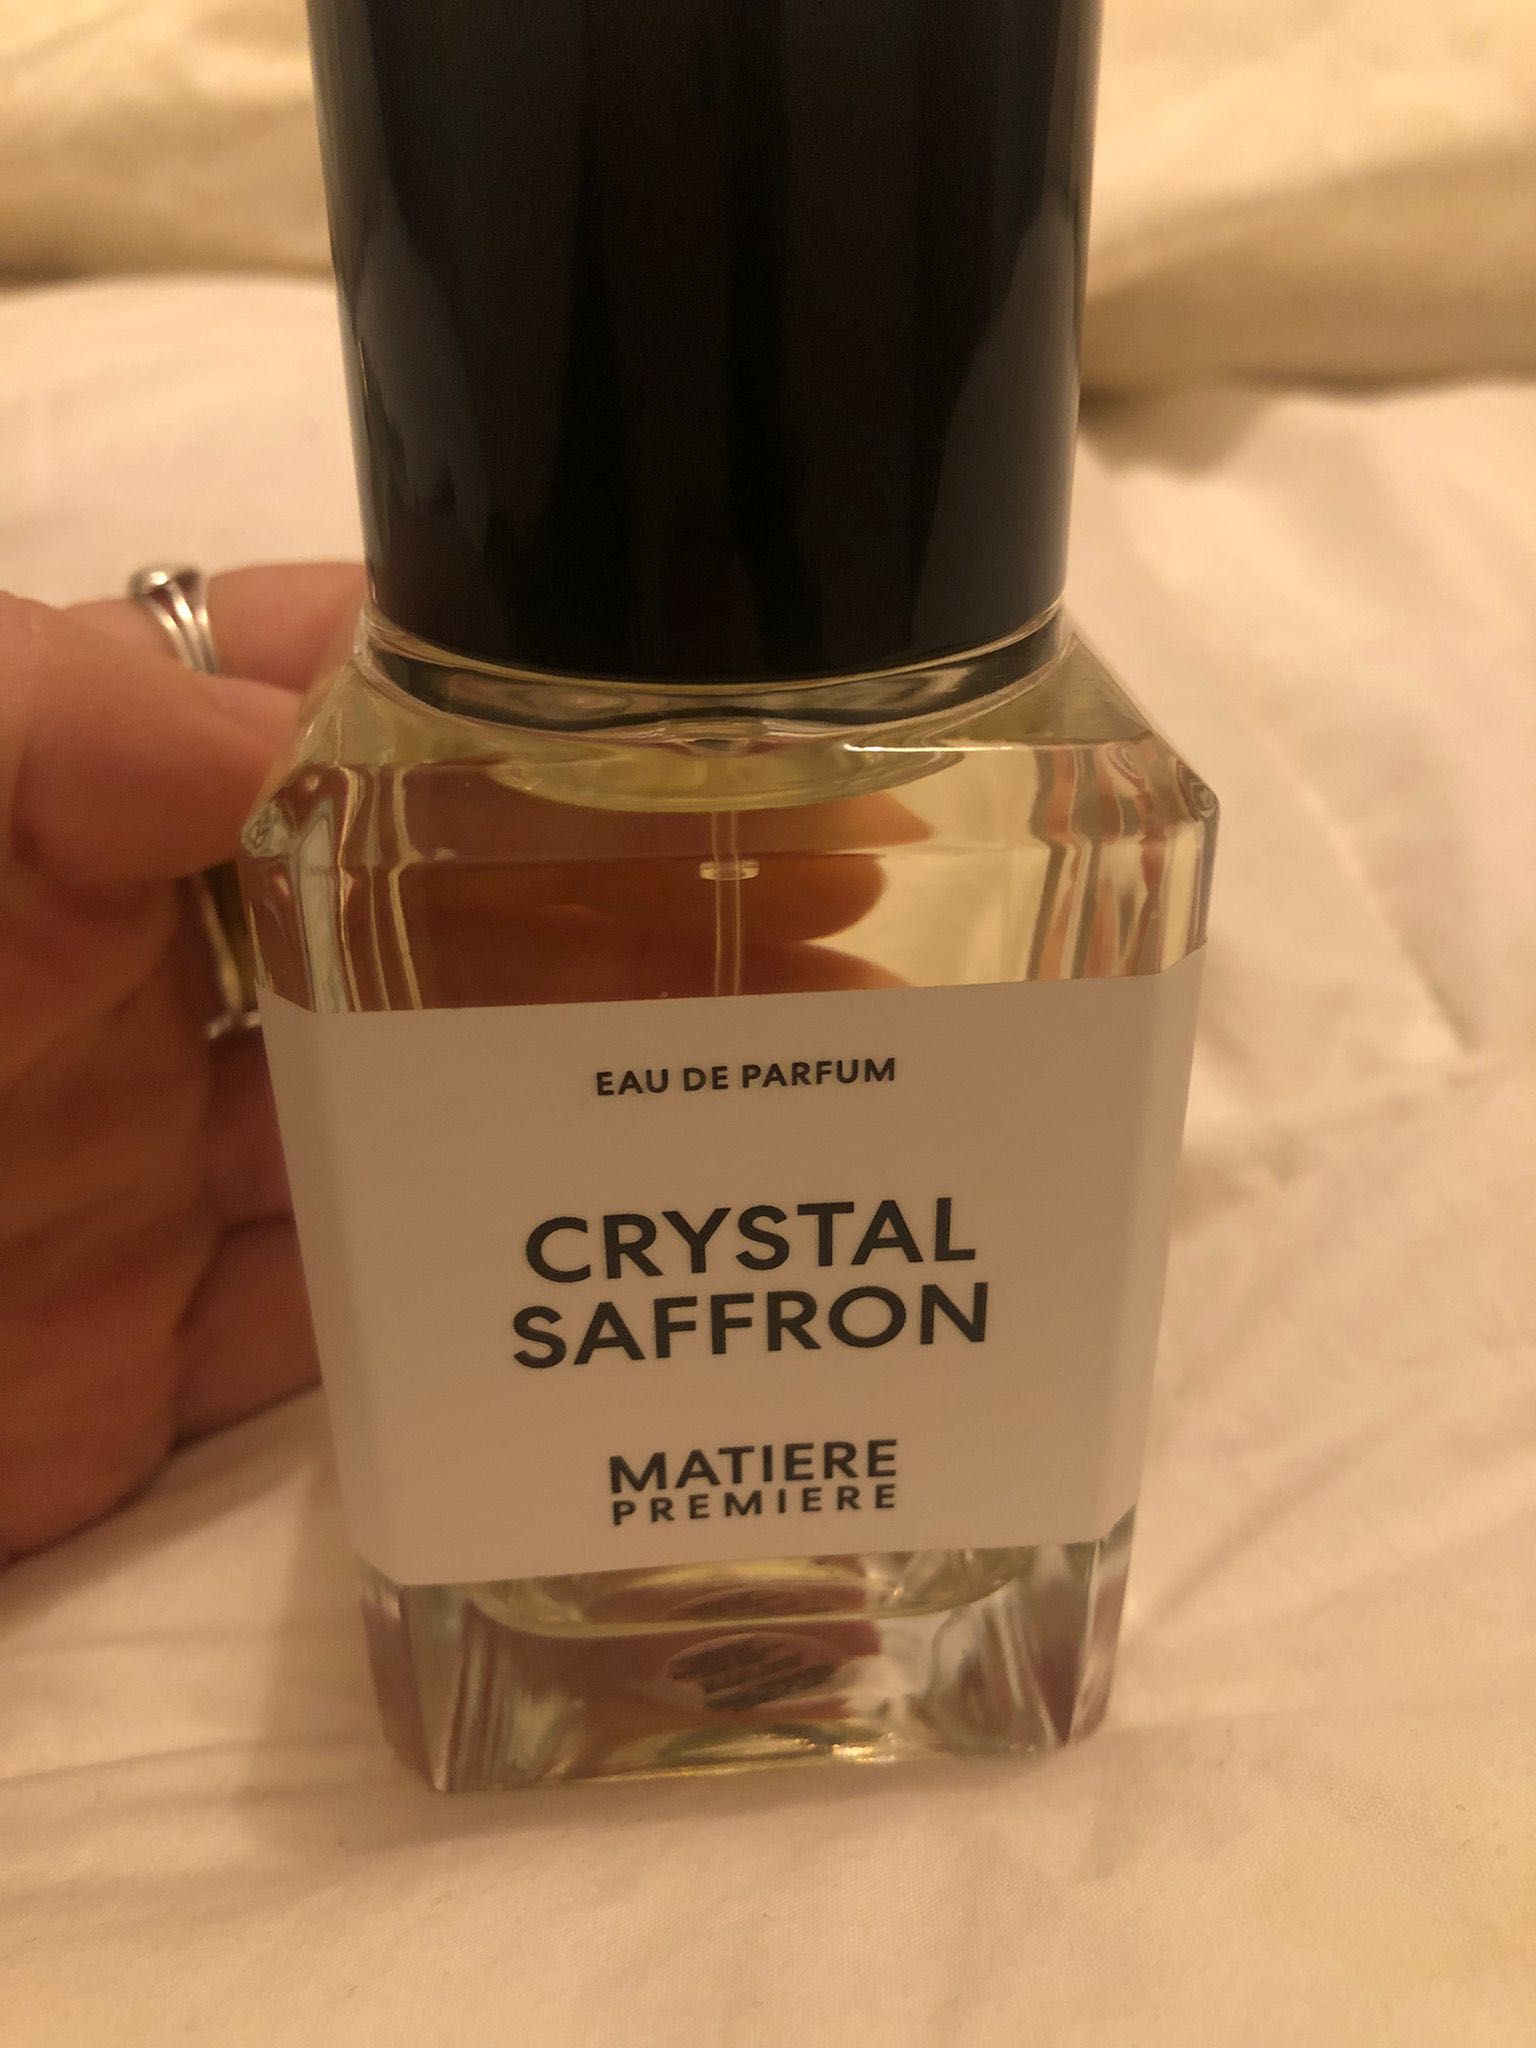 Perfume Crystal Saffron